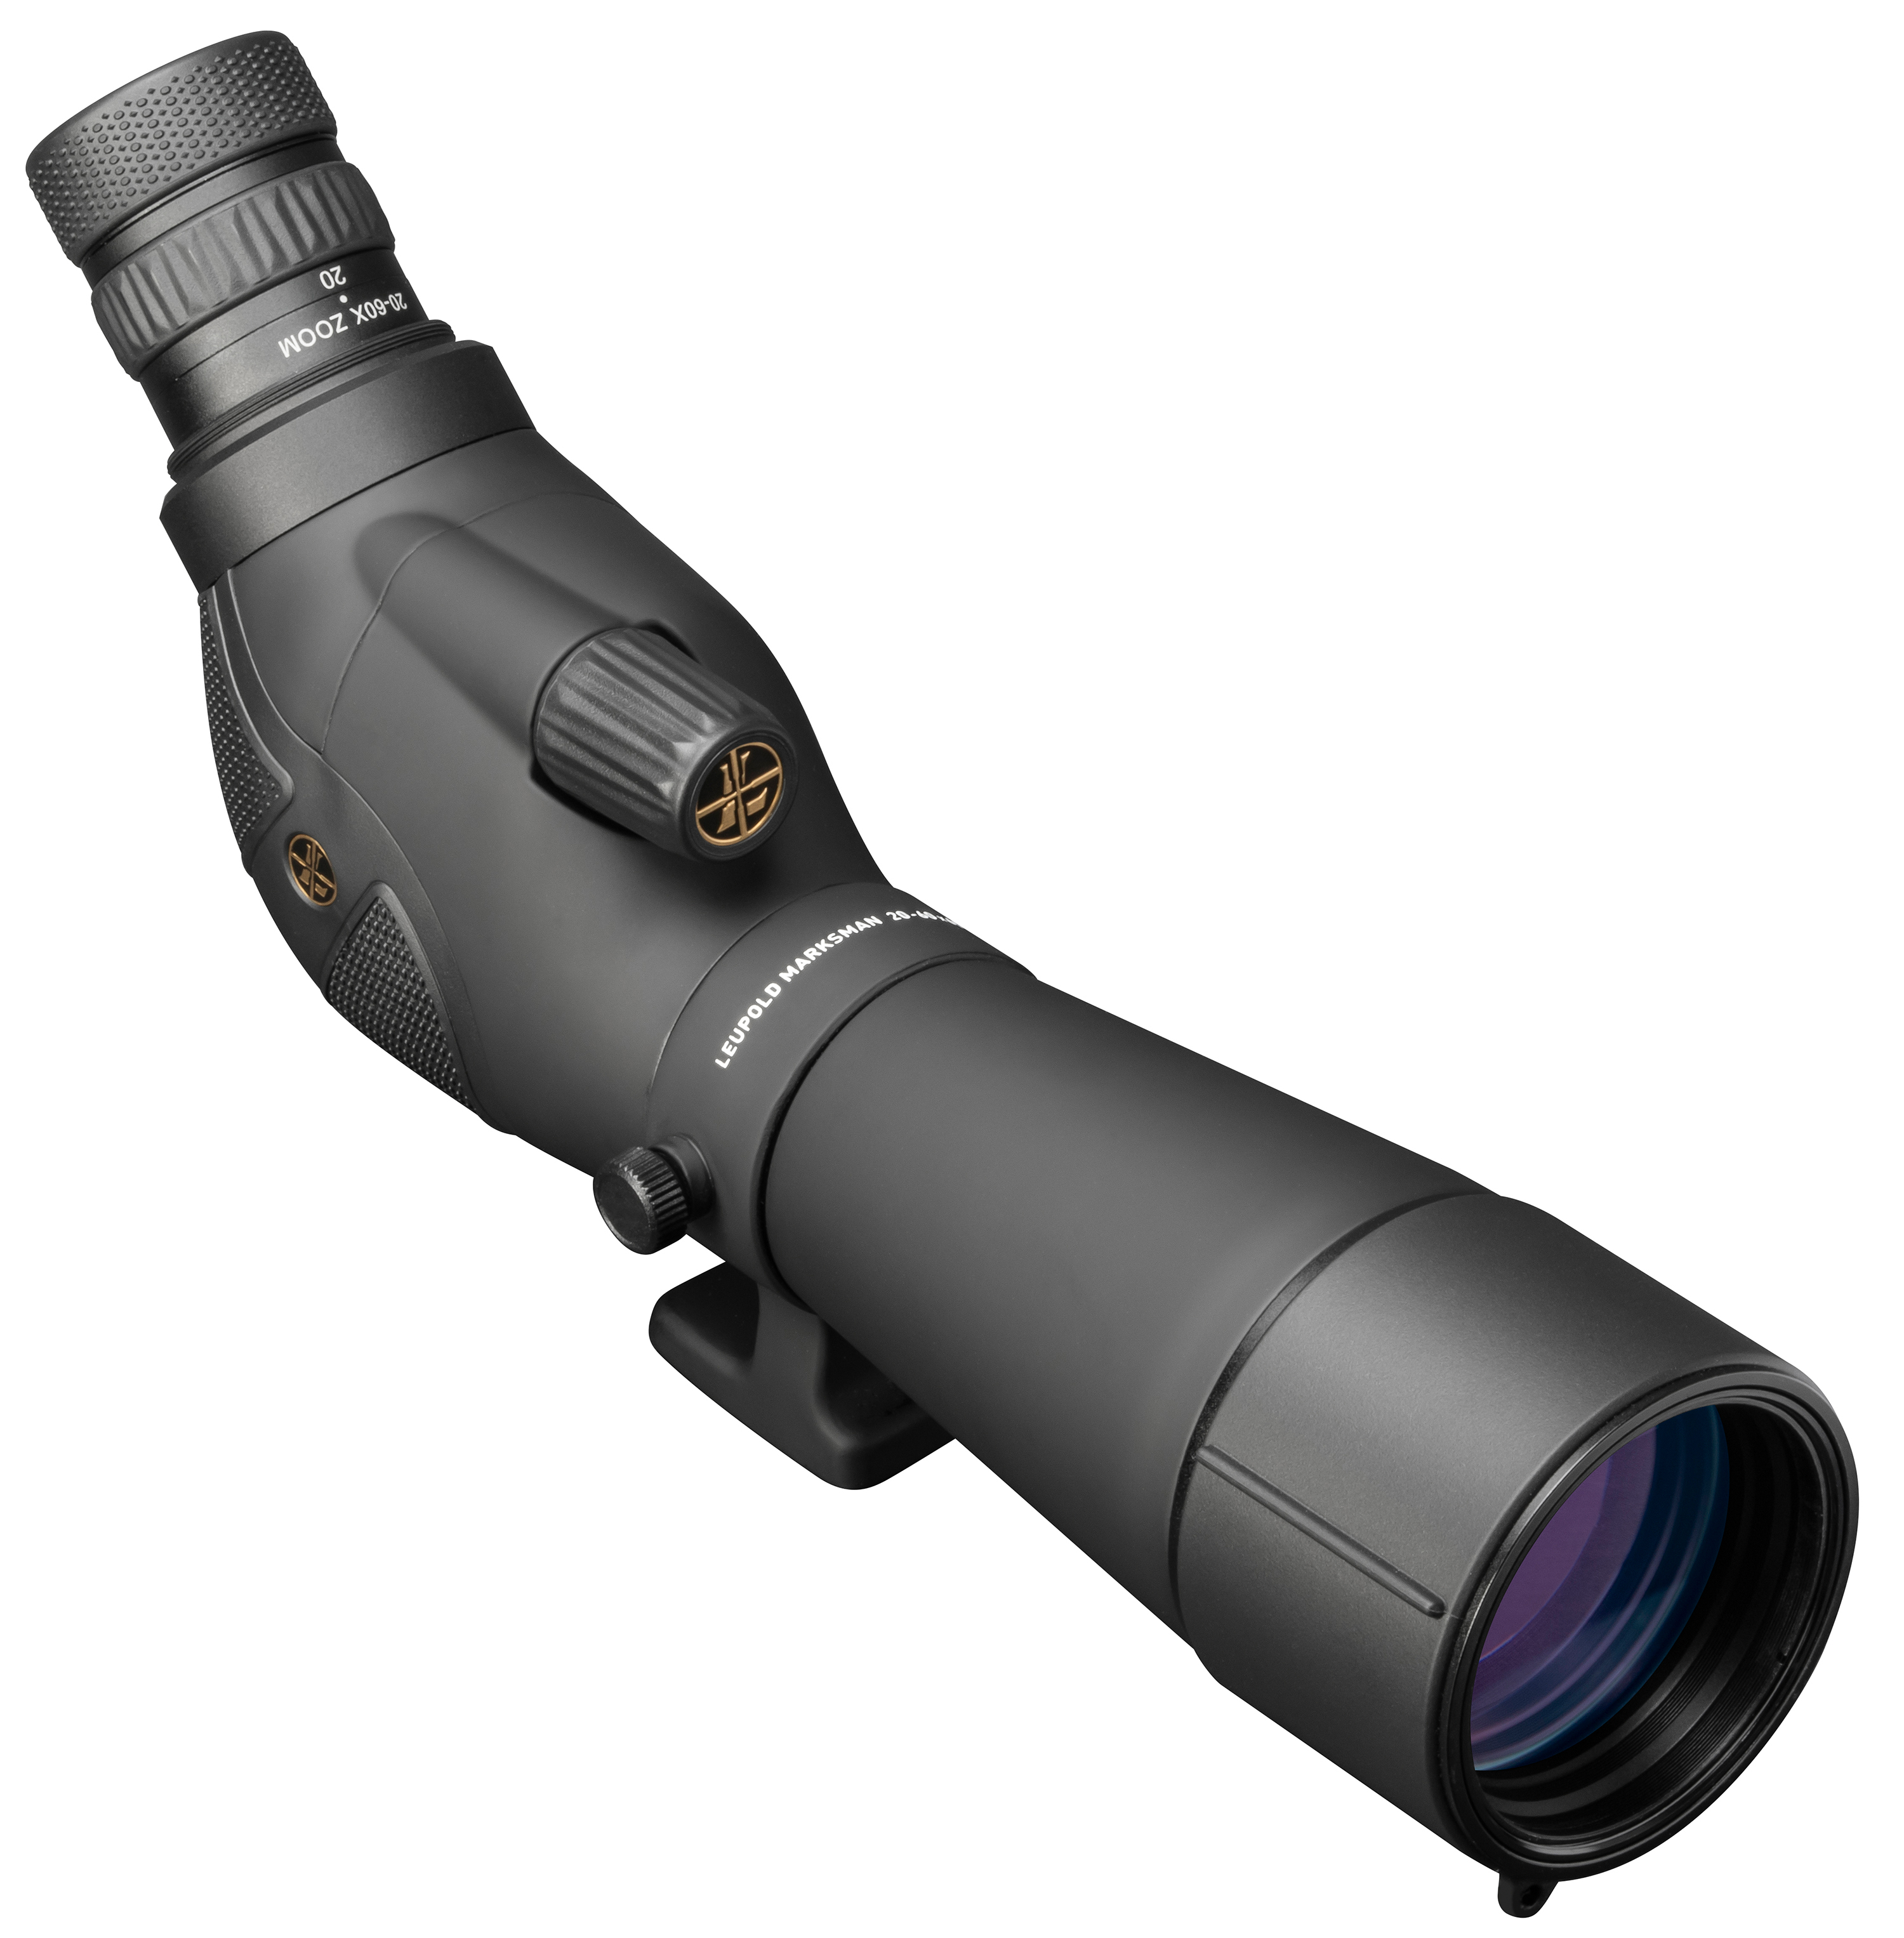 Has scope. Зрительная труба Celestron c65 Mini Mak. Leupold. Konus spotting scope Konuspot-60c 20-60x60. Ed spotting scope 25-75×60.